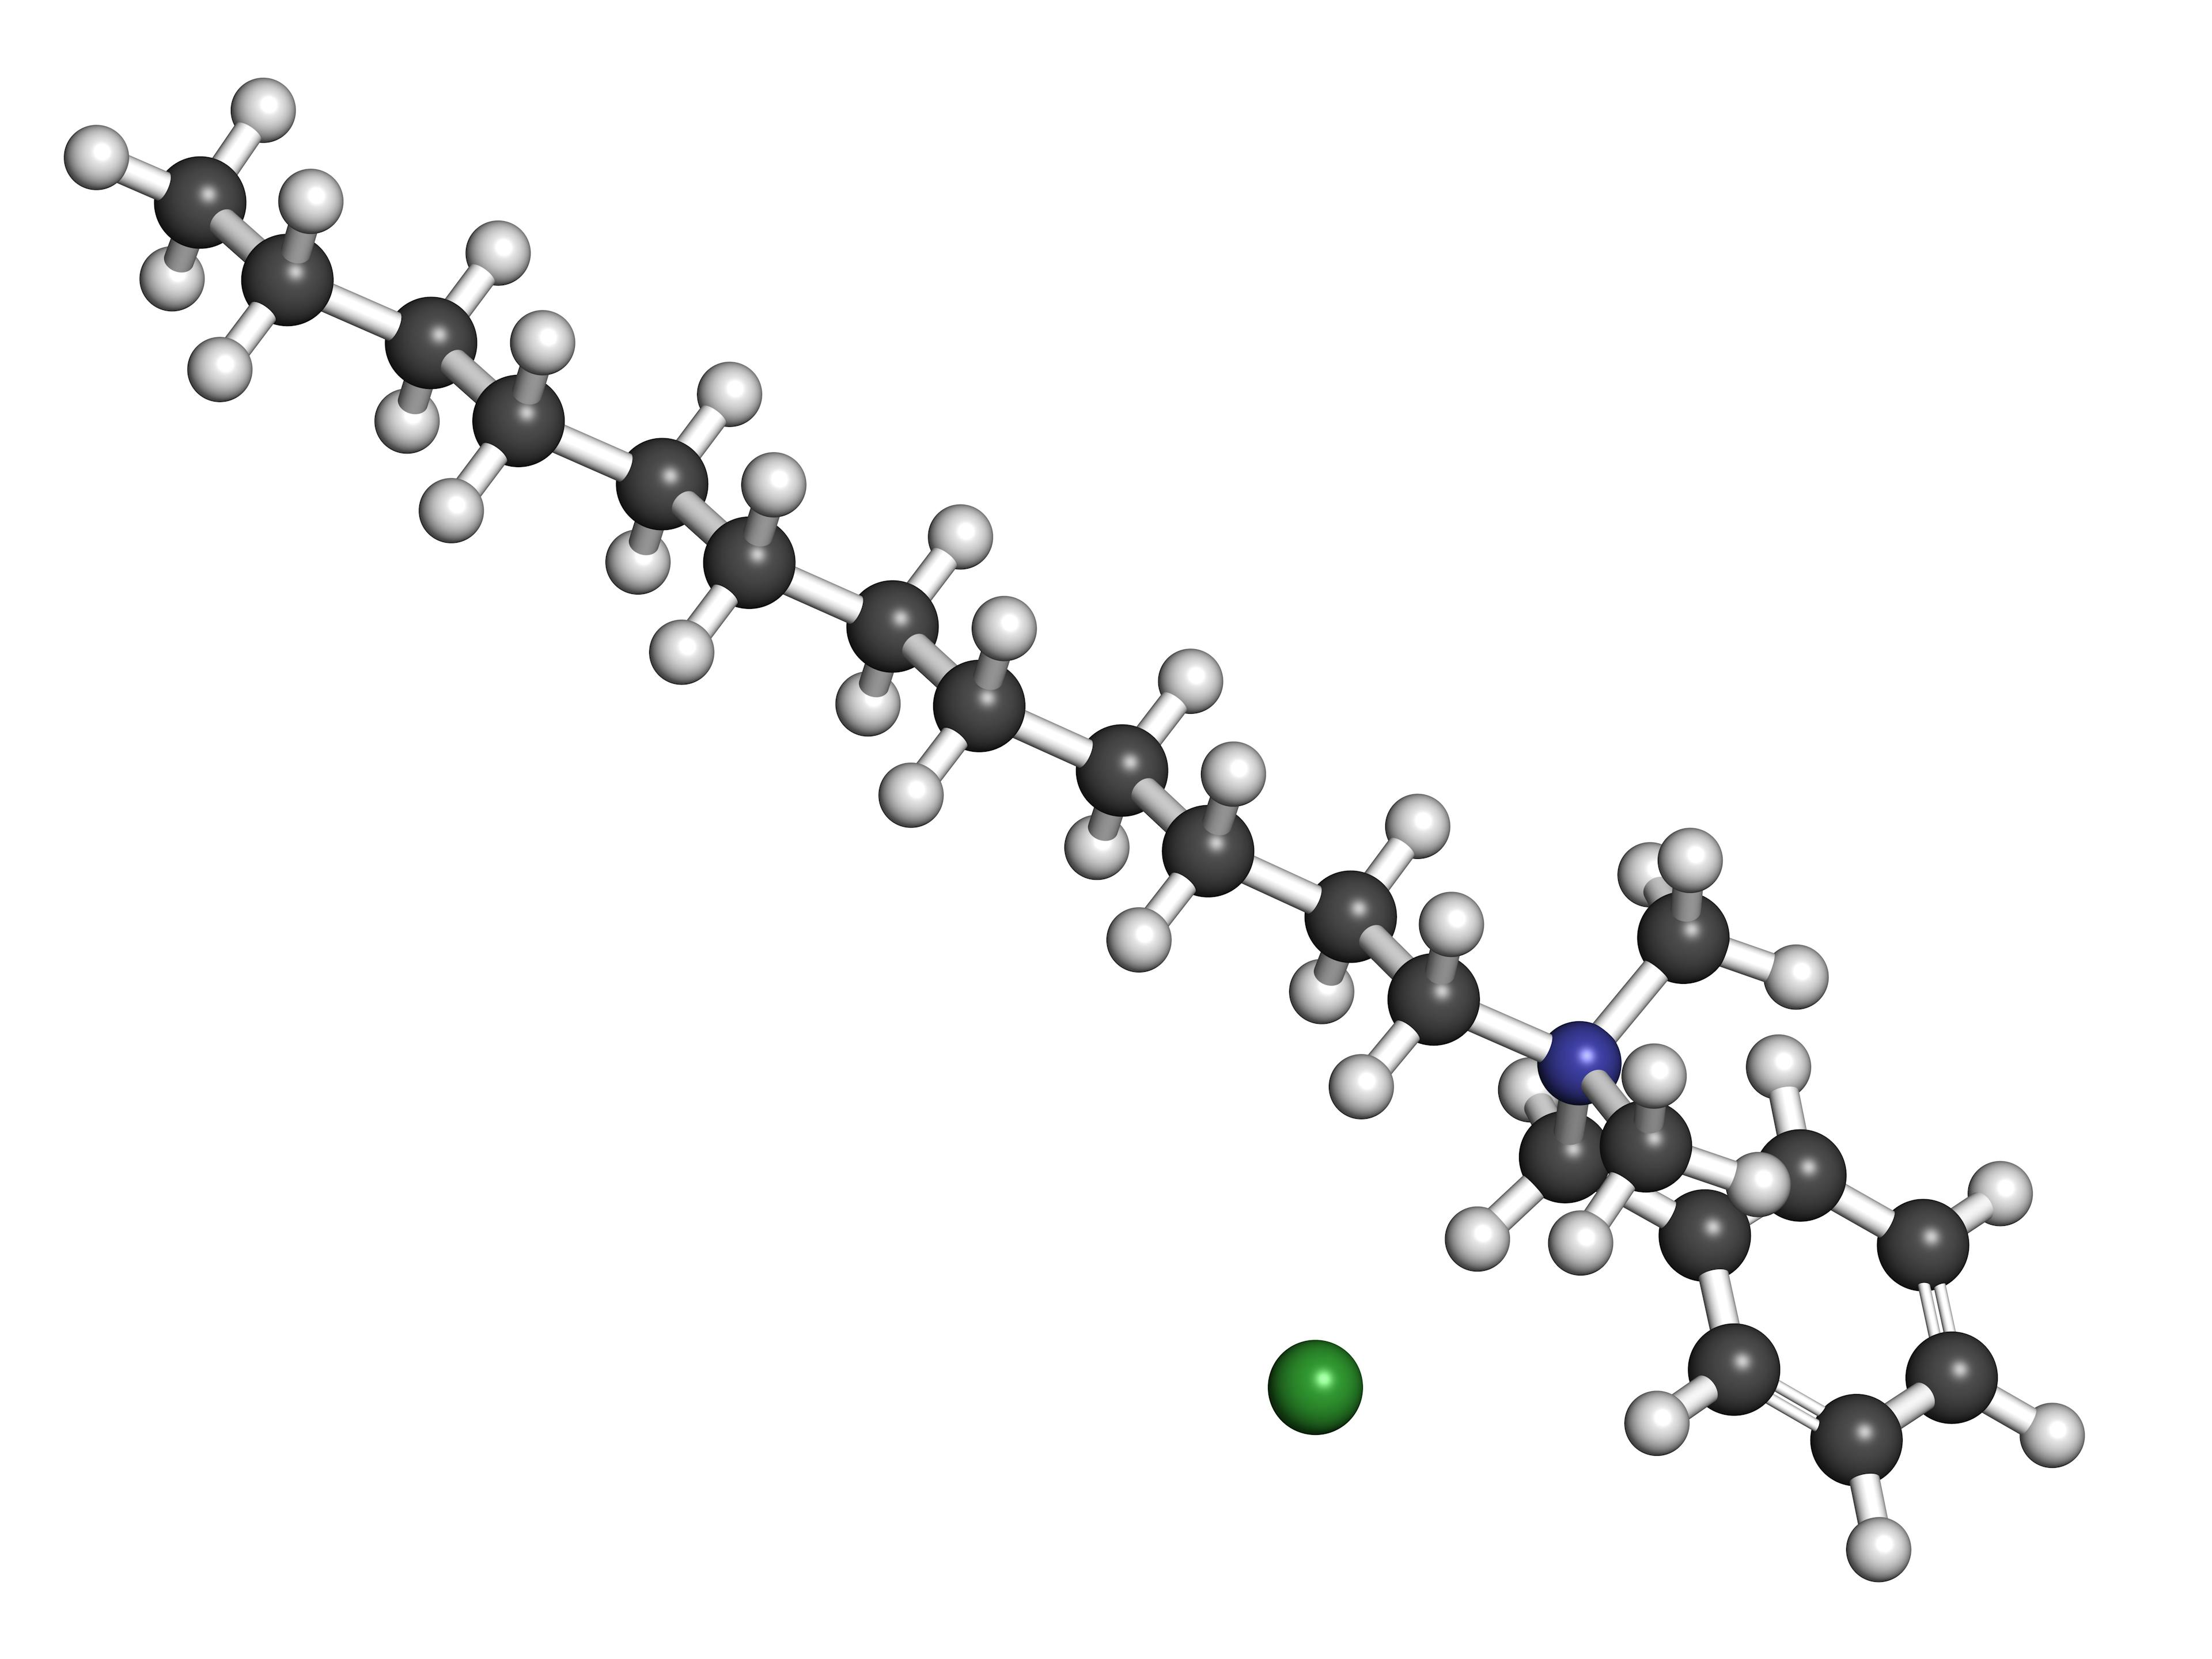 Benzalkonium chloride biocide, molecular model | Image Credit: © molekuul.be - stock.adobe.com